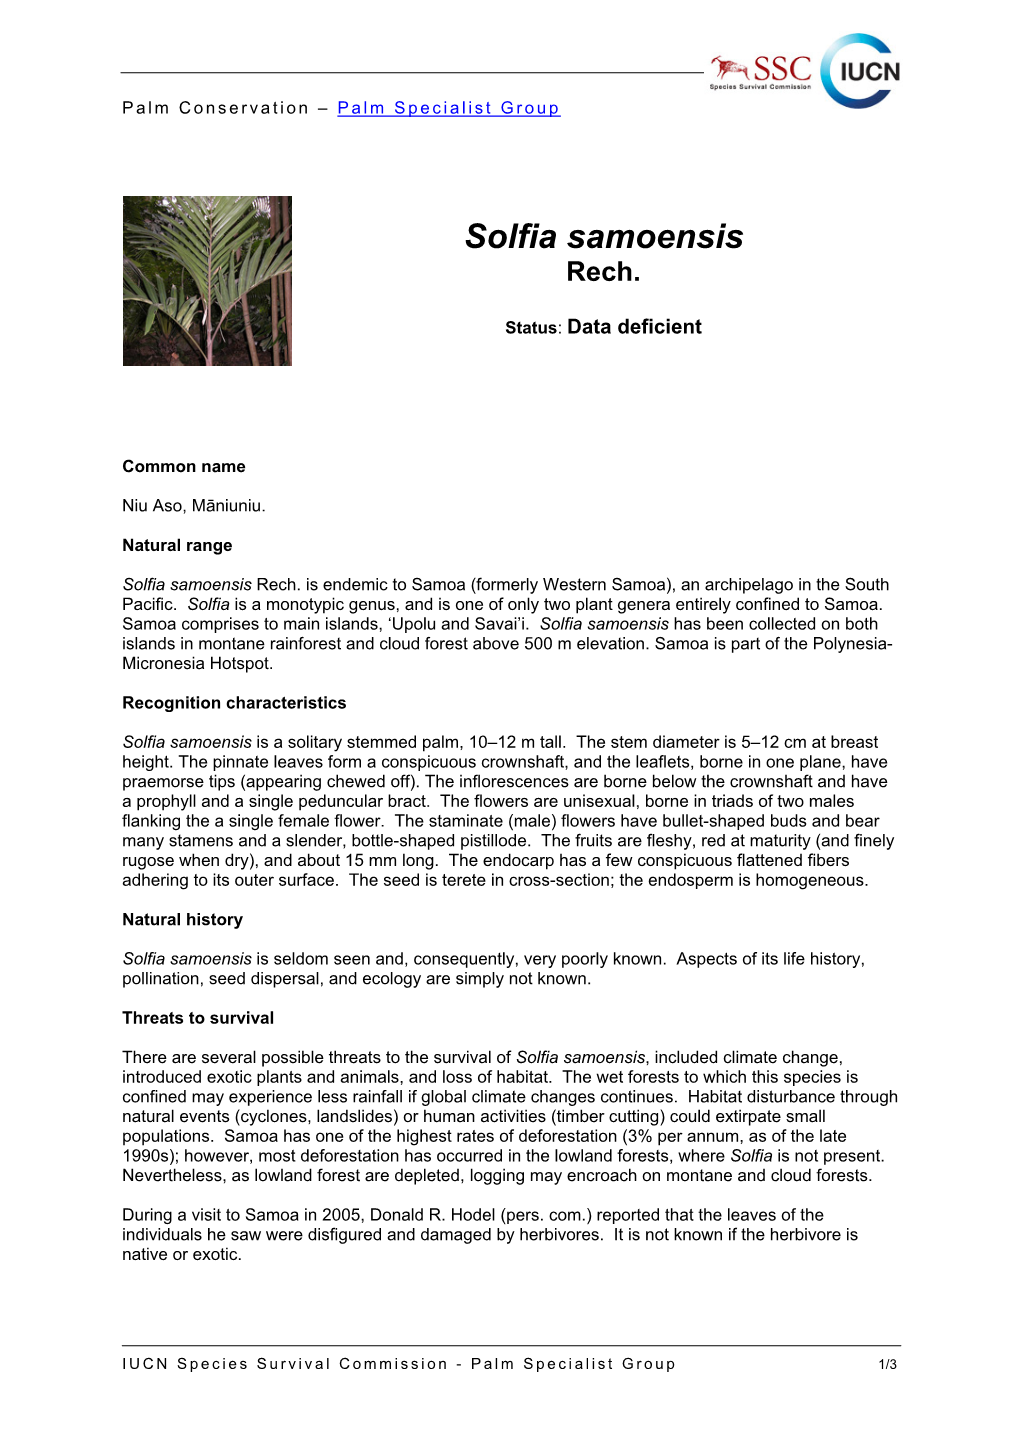 Solfia Samoensis Conservation Fact Sheet